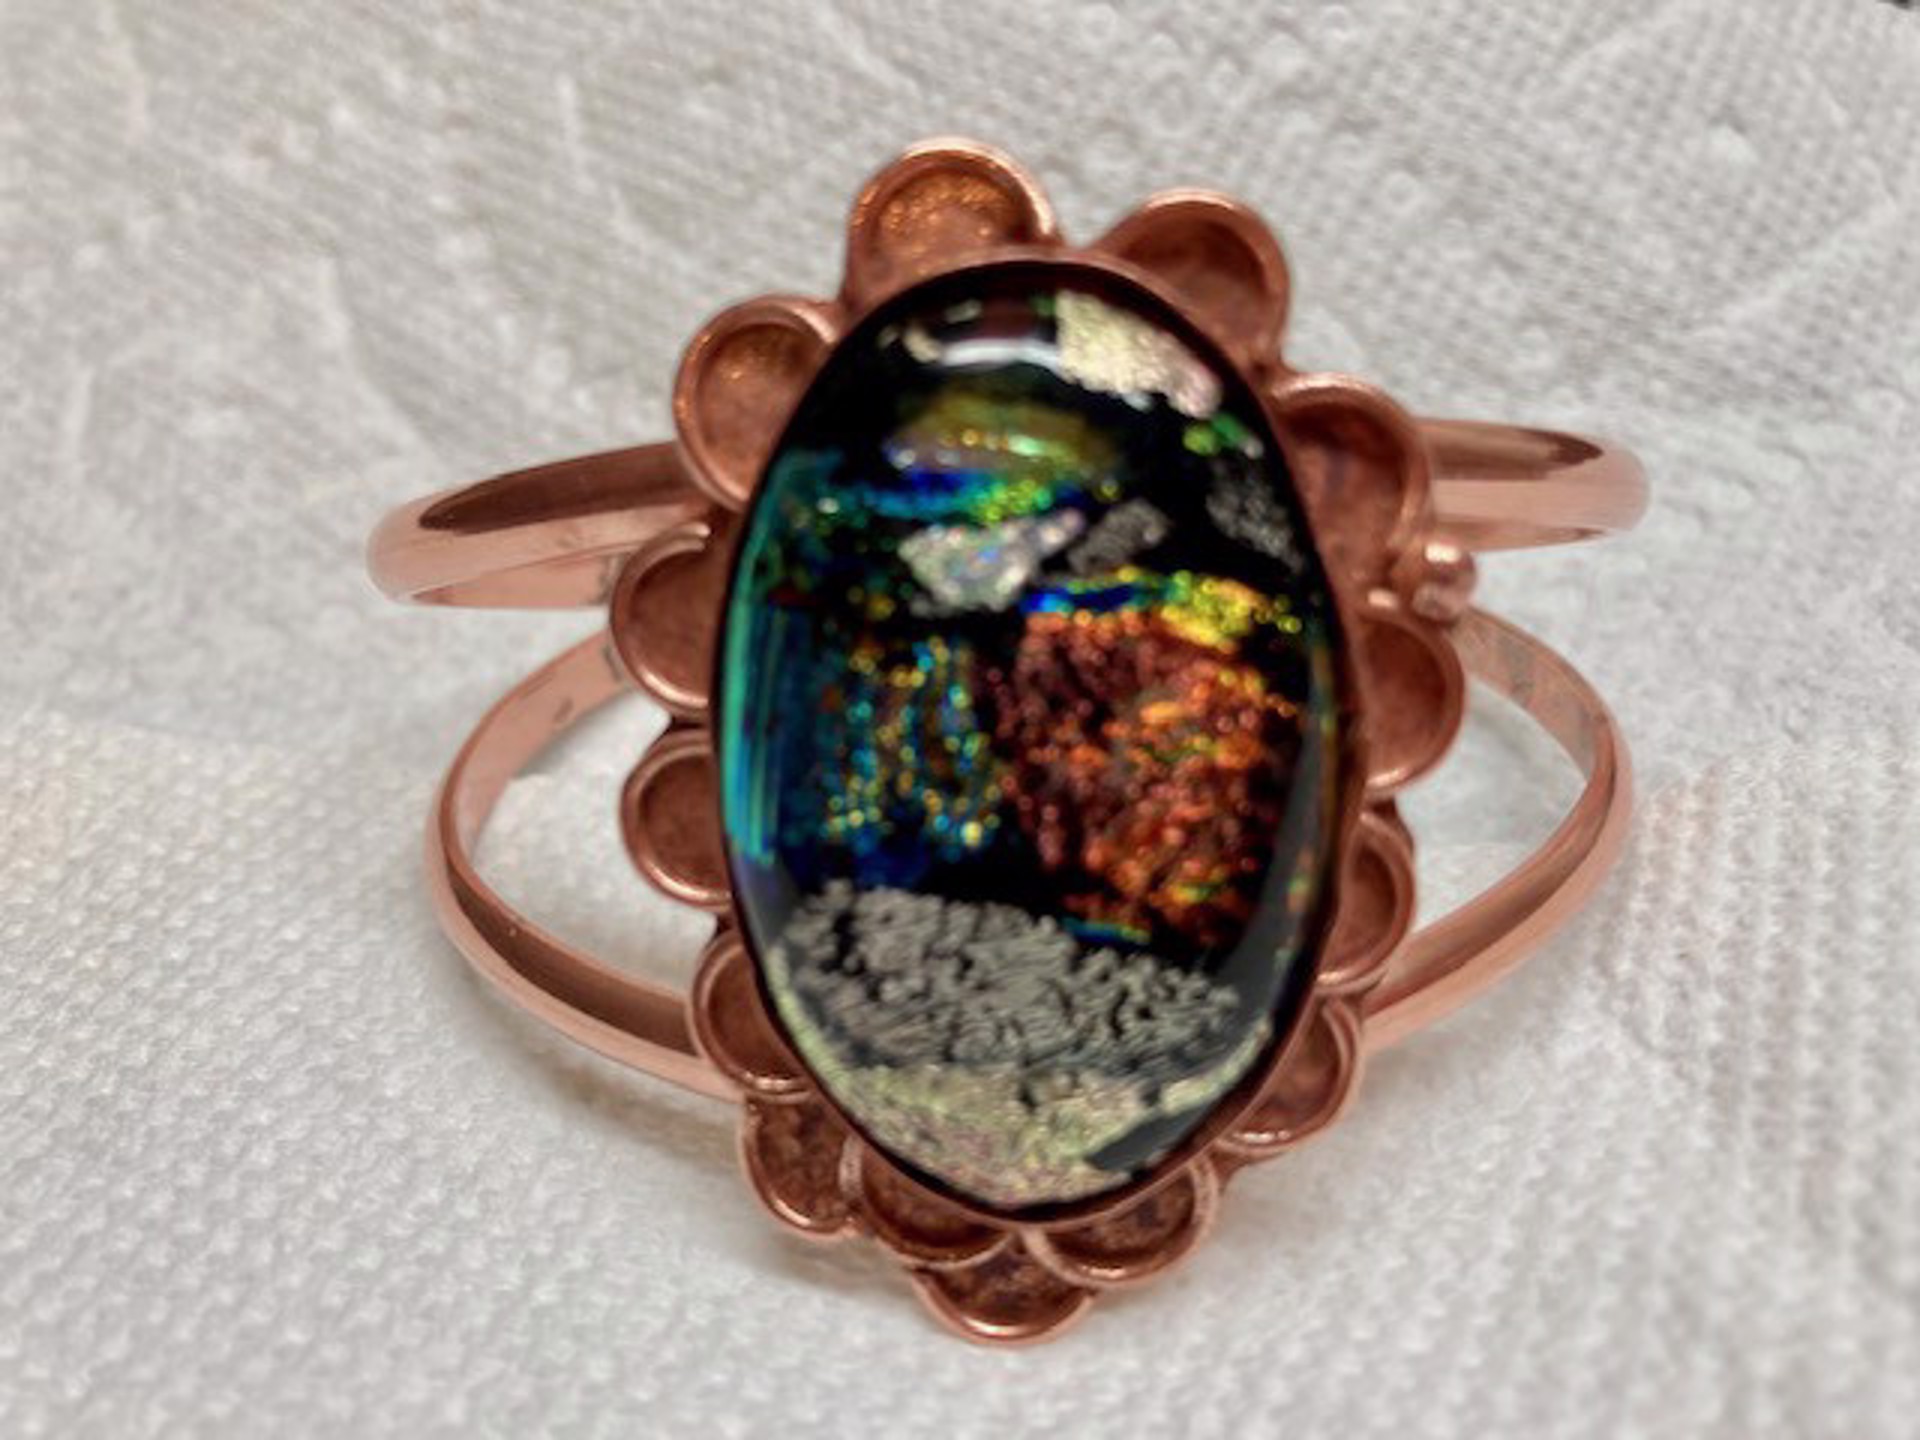 Copper Bracelet #2 by Jenna Plein